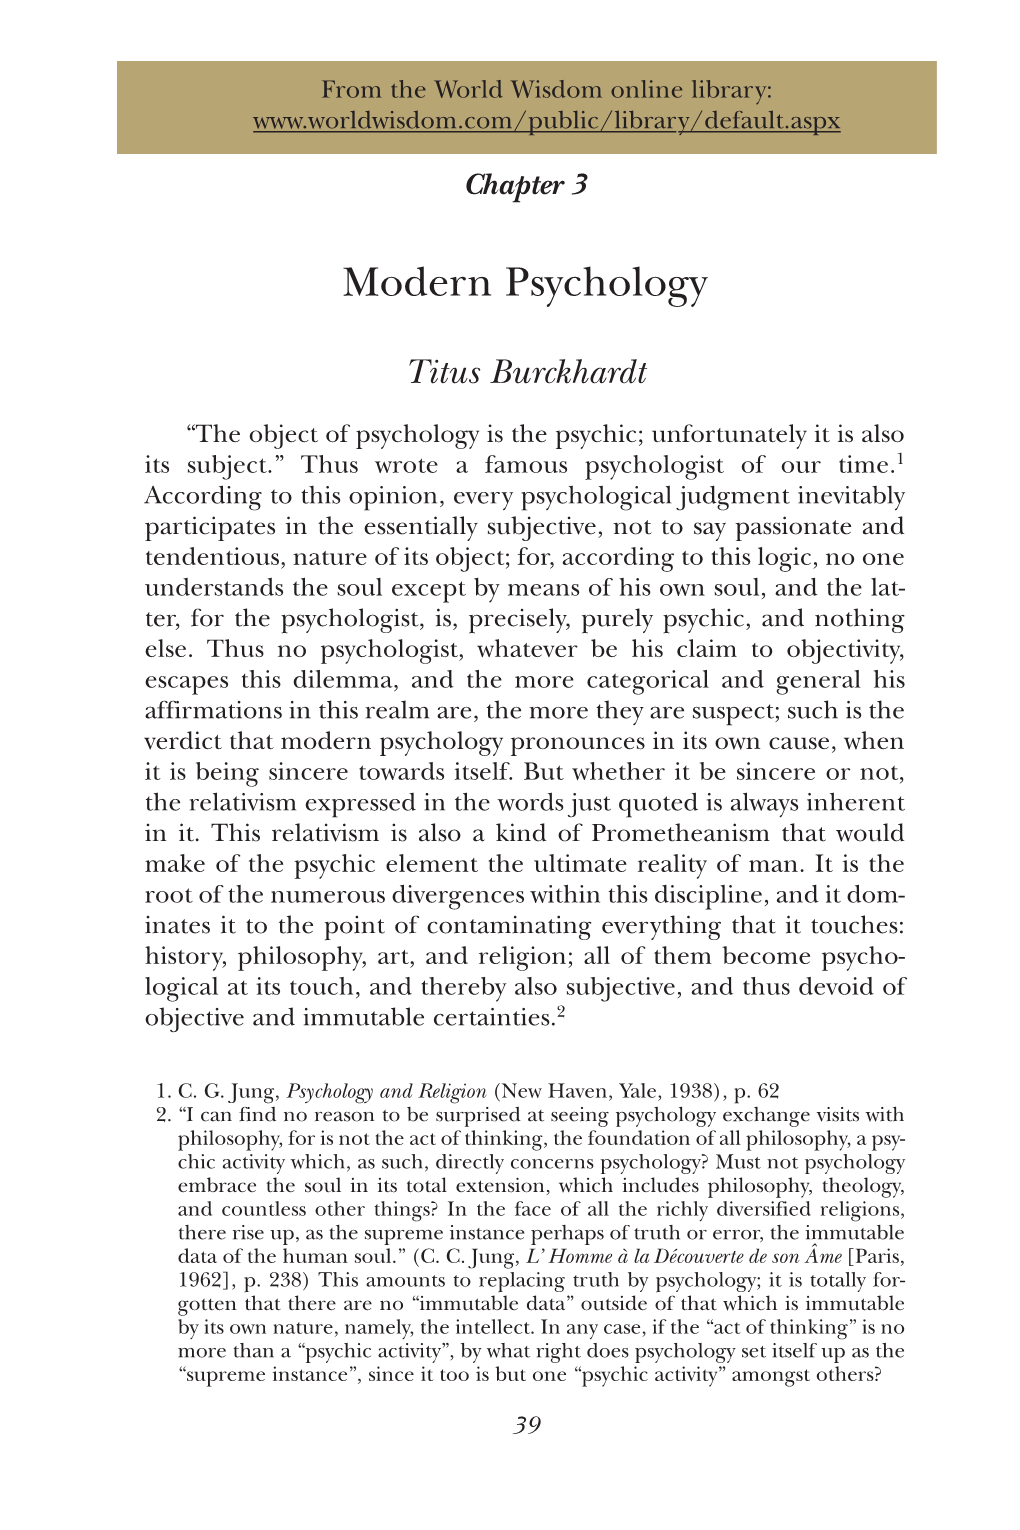 "Modern Psychology" by Titus Burckhardt